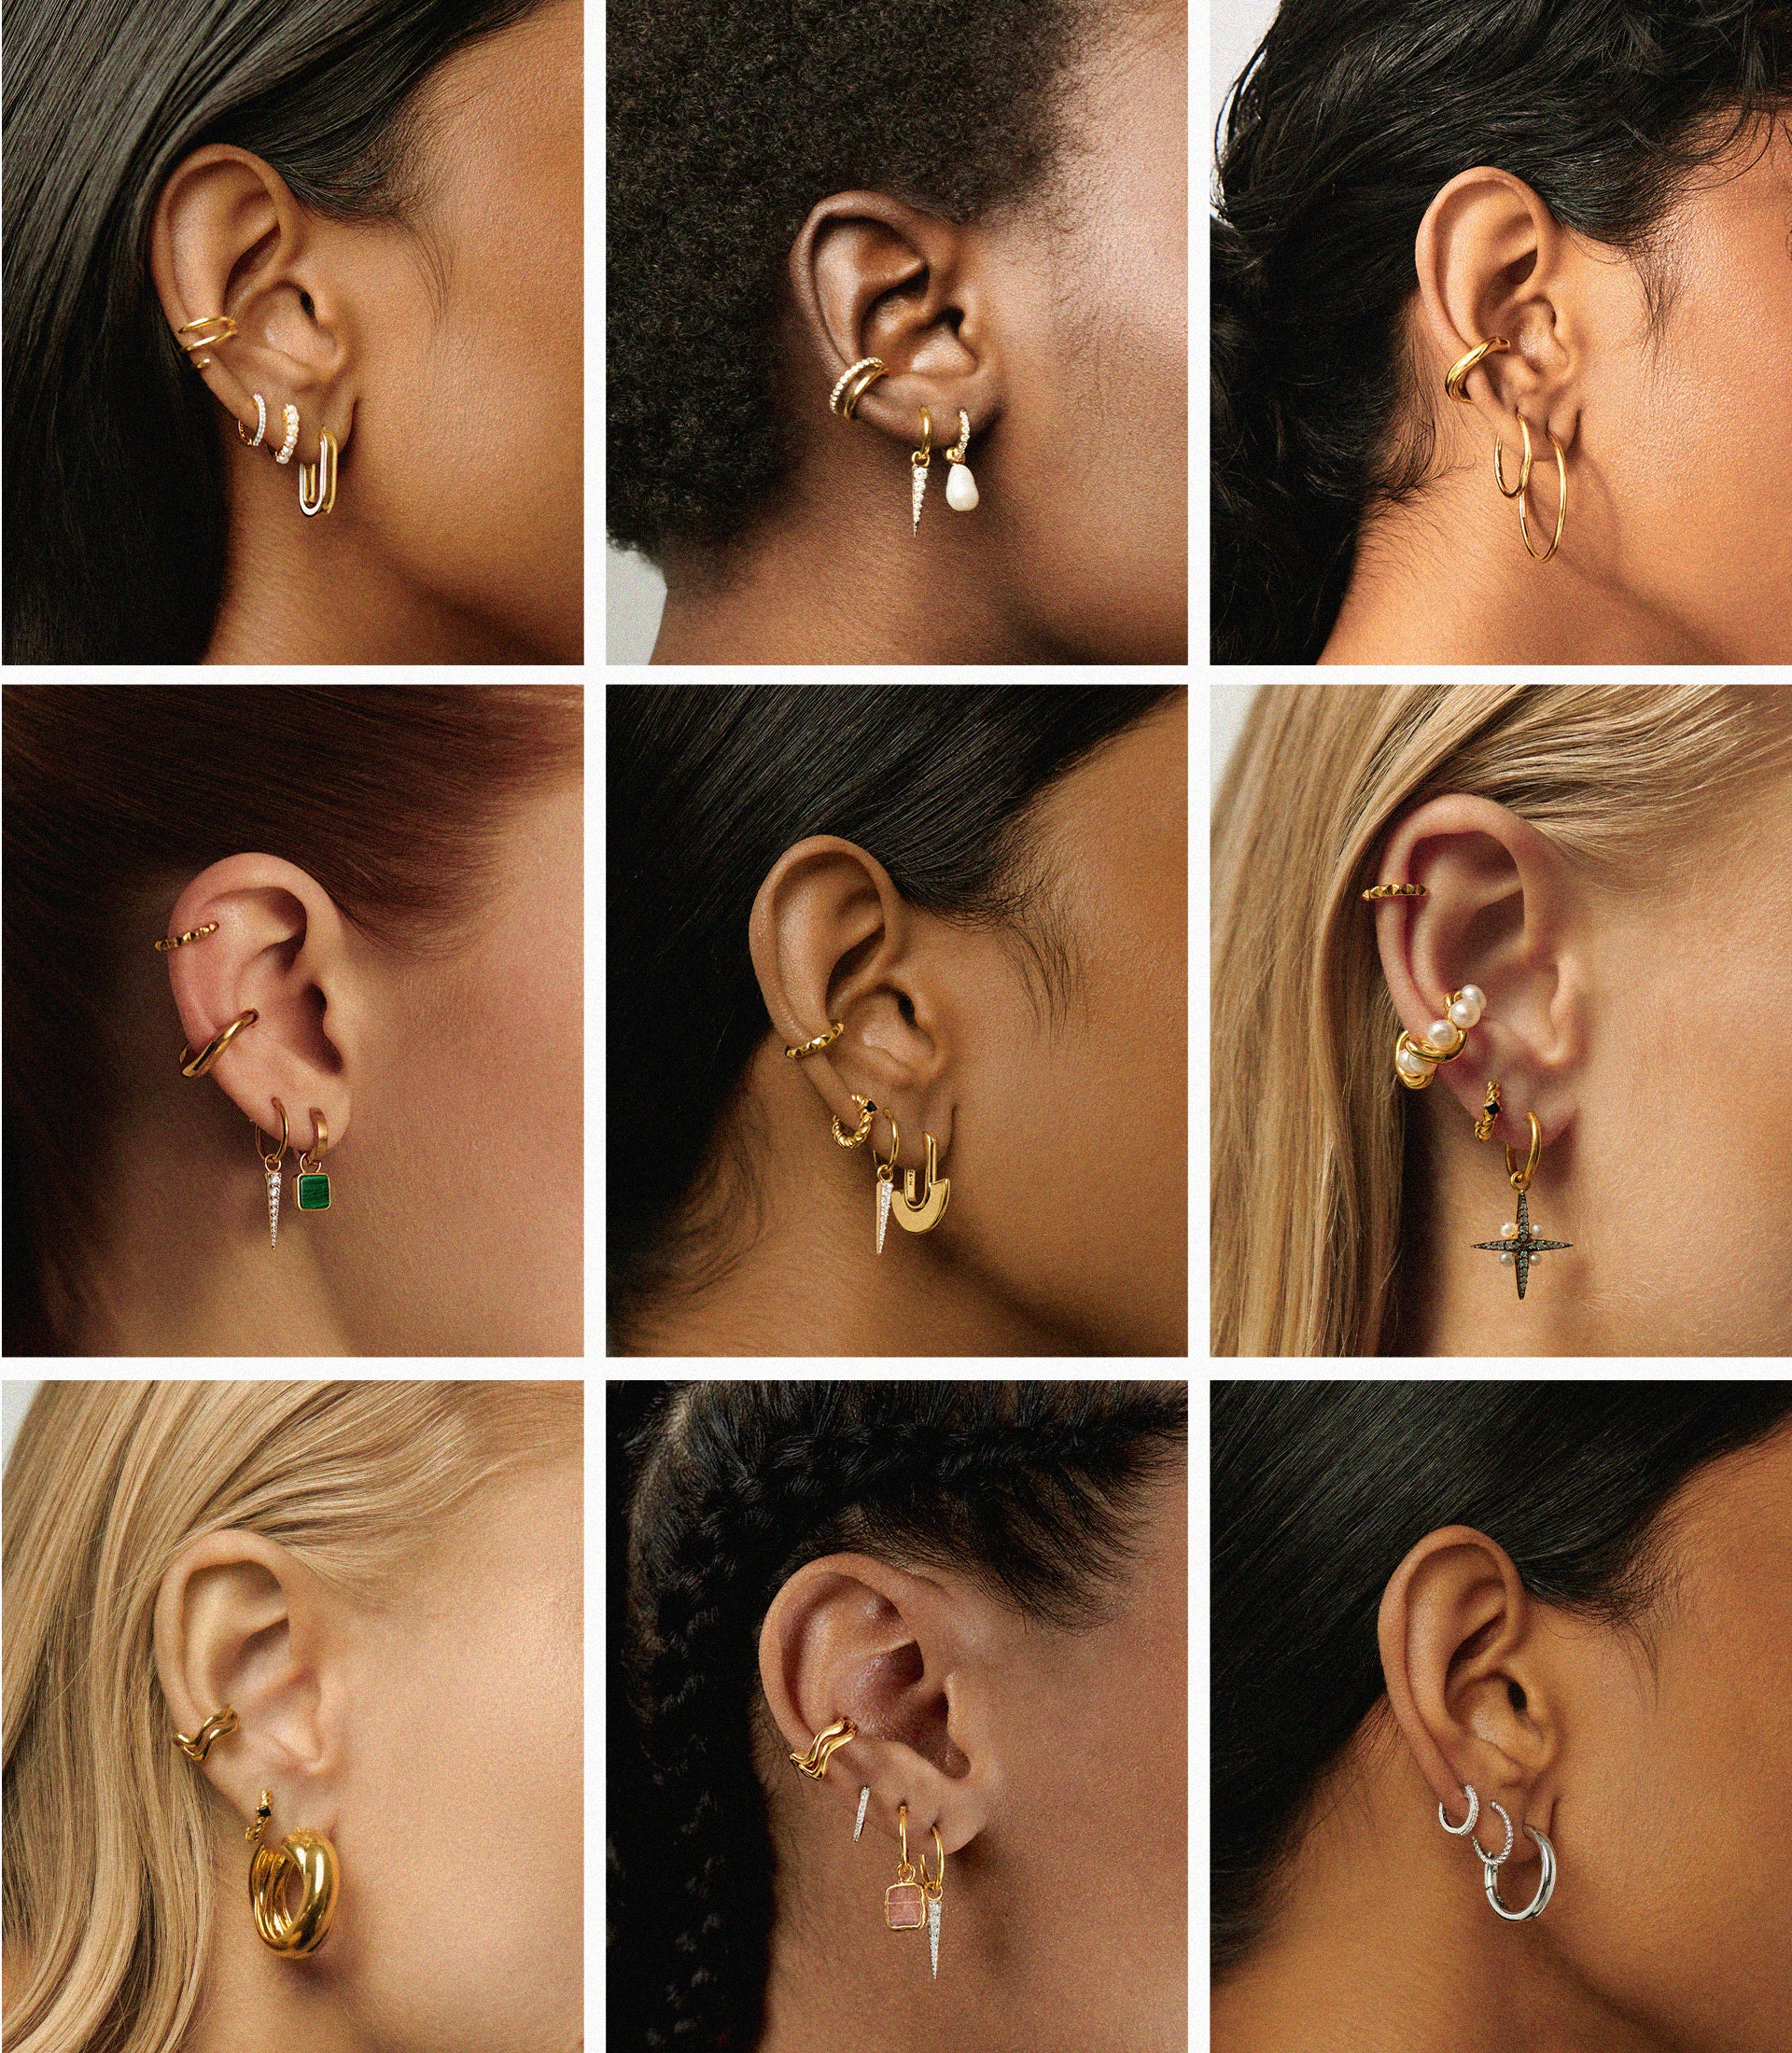 Buy Arzonai Needle Luxury Trendy Minimalist Dainty Tiny Ear Cuff Piercing  Studs Earrings for Women & Girls (Gold) at Amazon.in